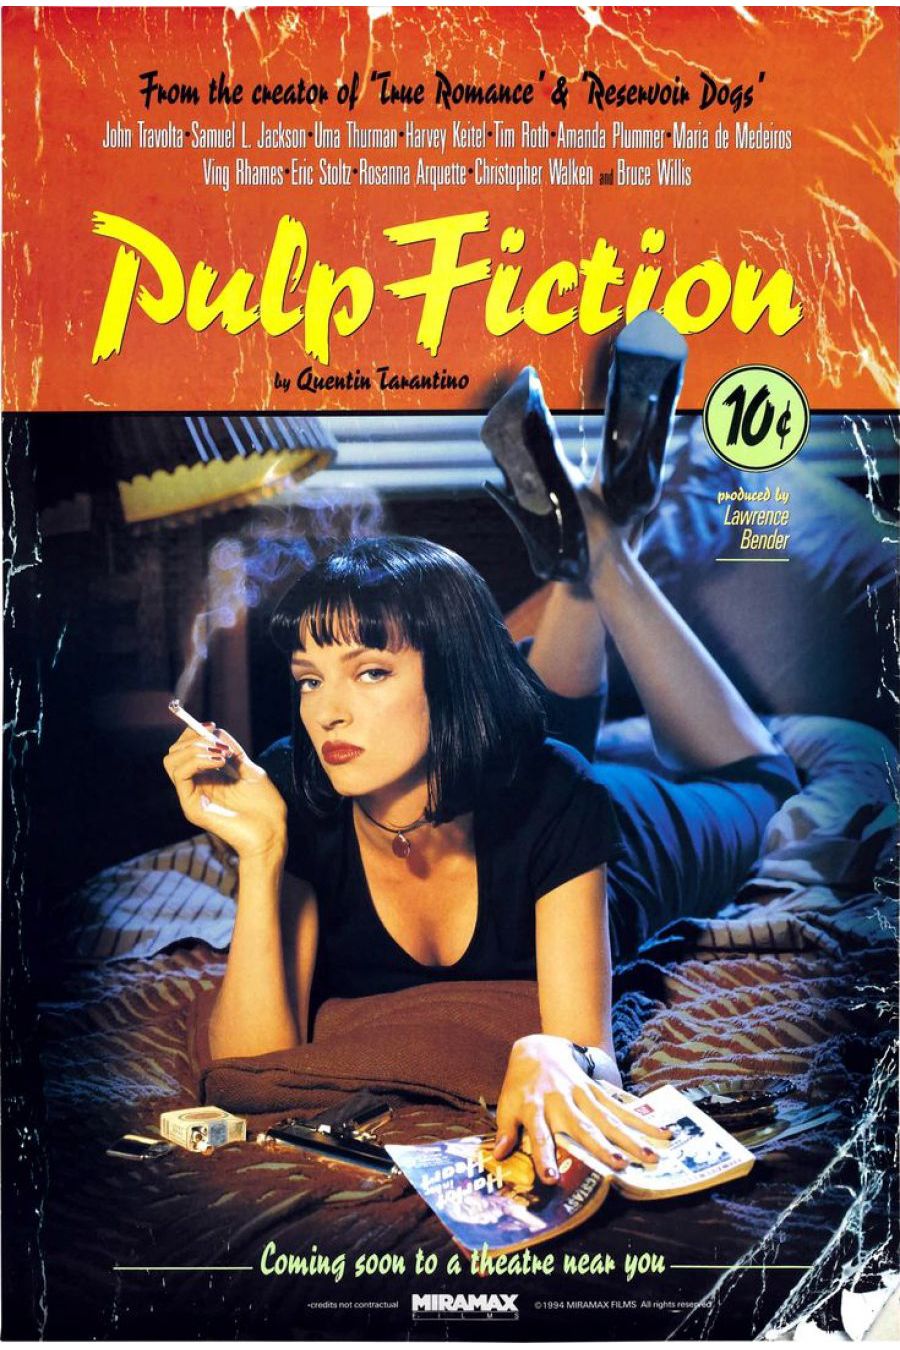 Pulp Fiction (Quentin Tarantino, 1994)